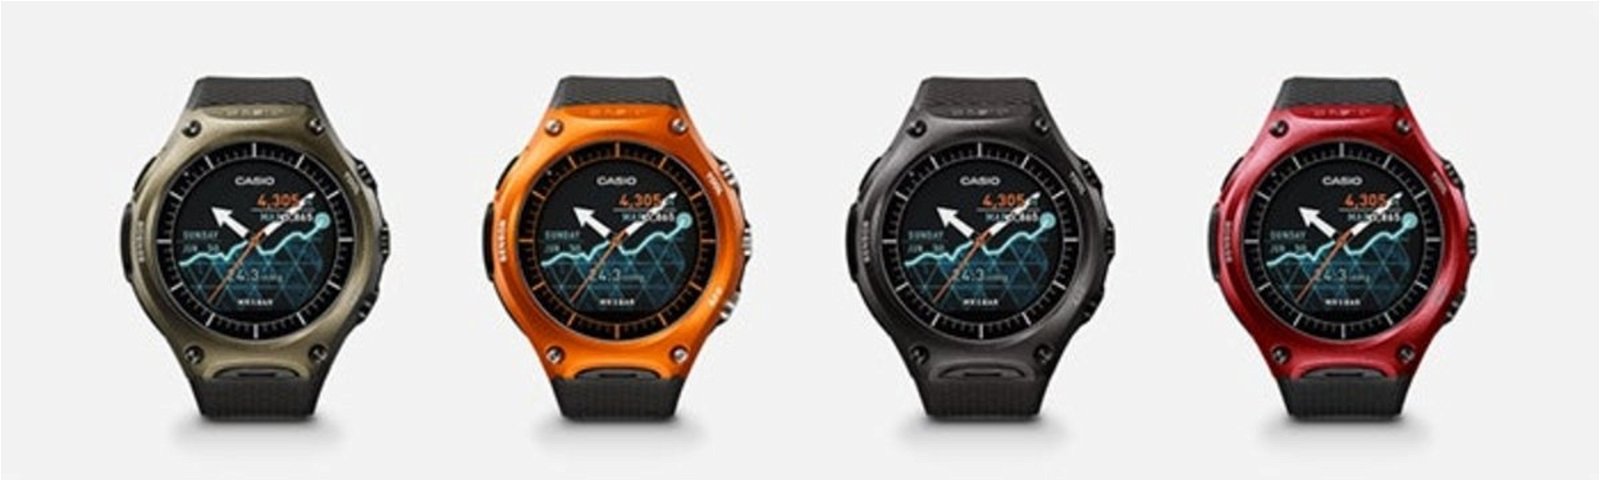 Diferentes modelos Casio Smart Outdoor Watch